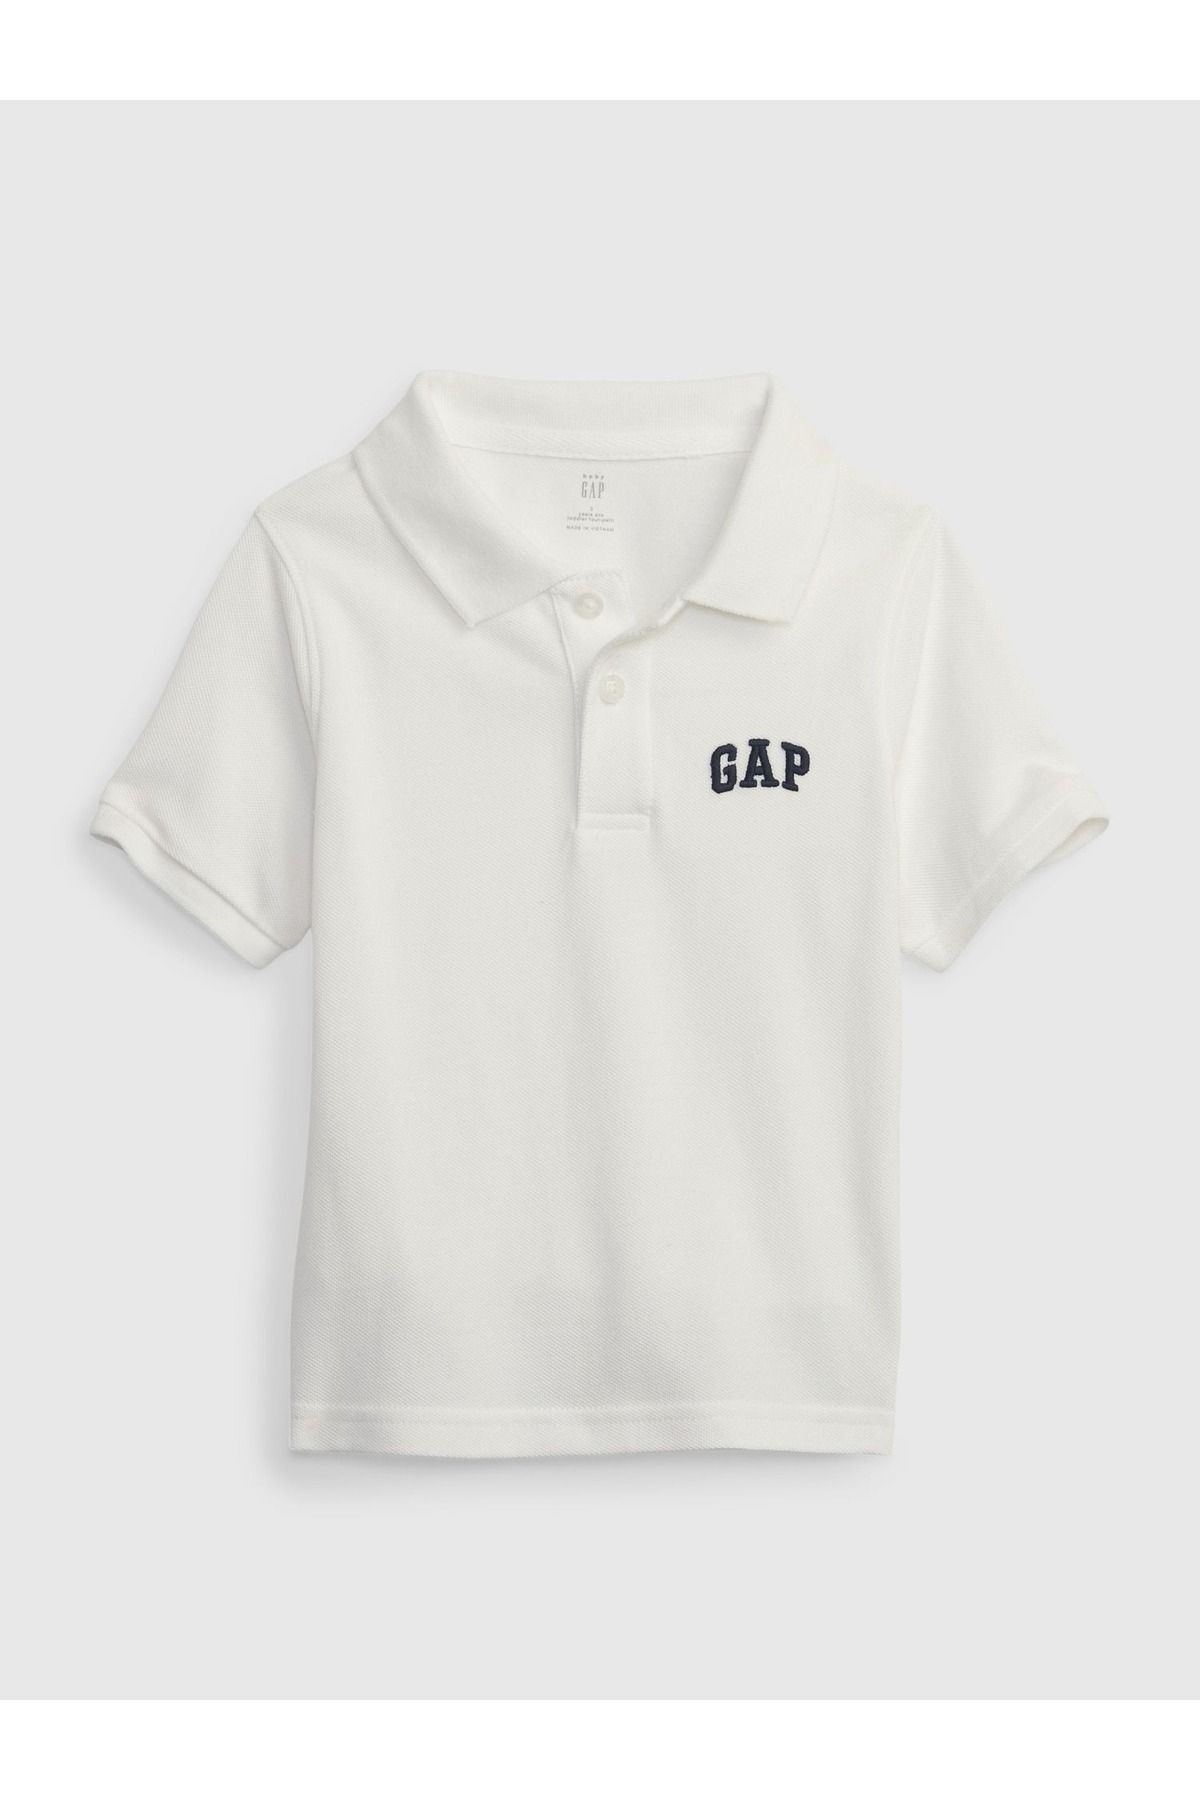 GAP Erkek Bebek Kırık Beyaz Logo Polo Yaka Kısa Kollu T-shirt